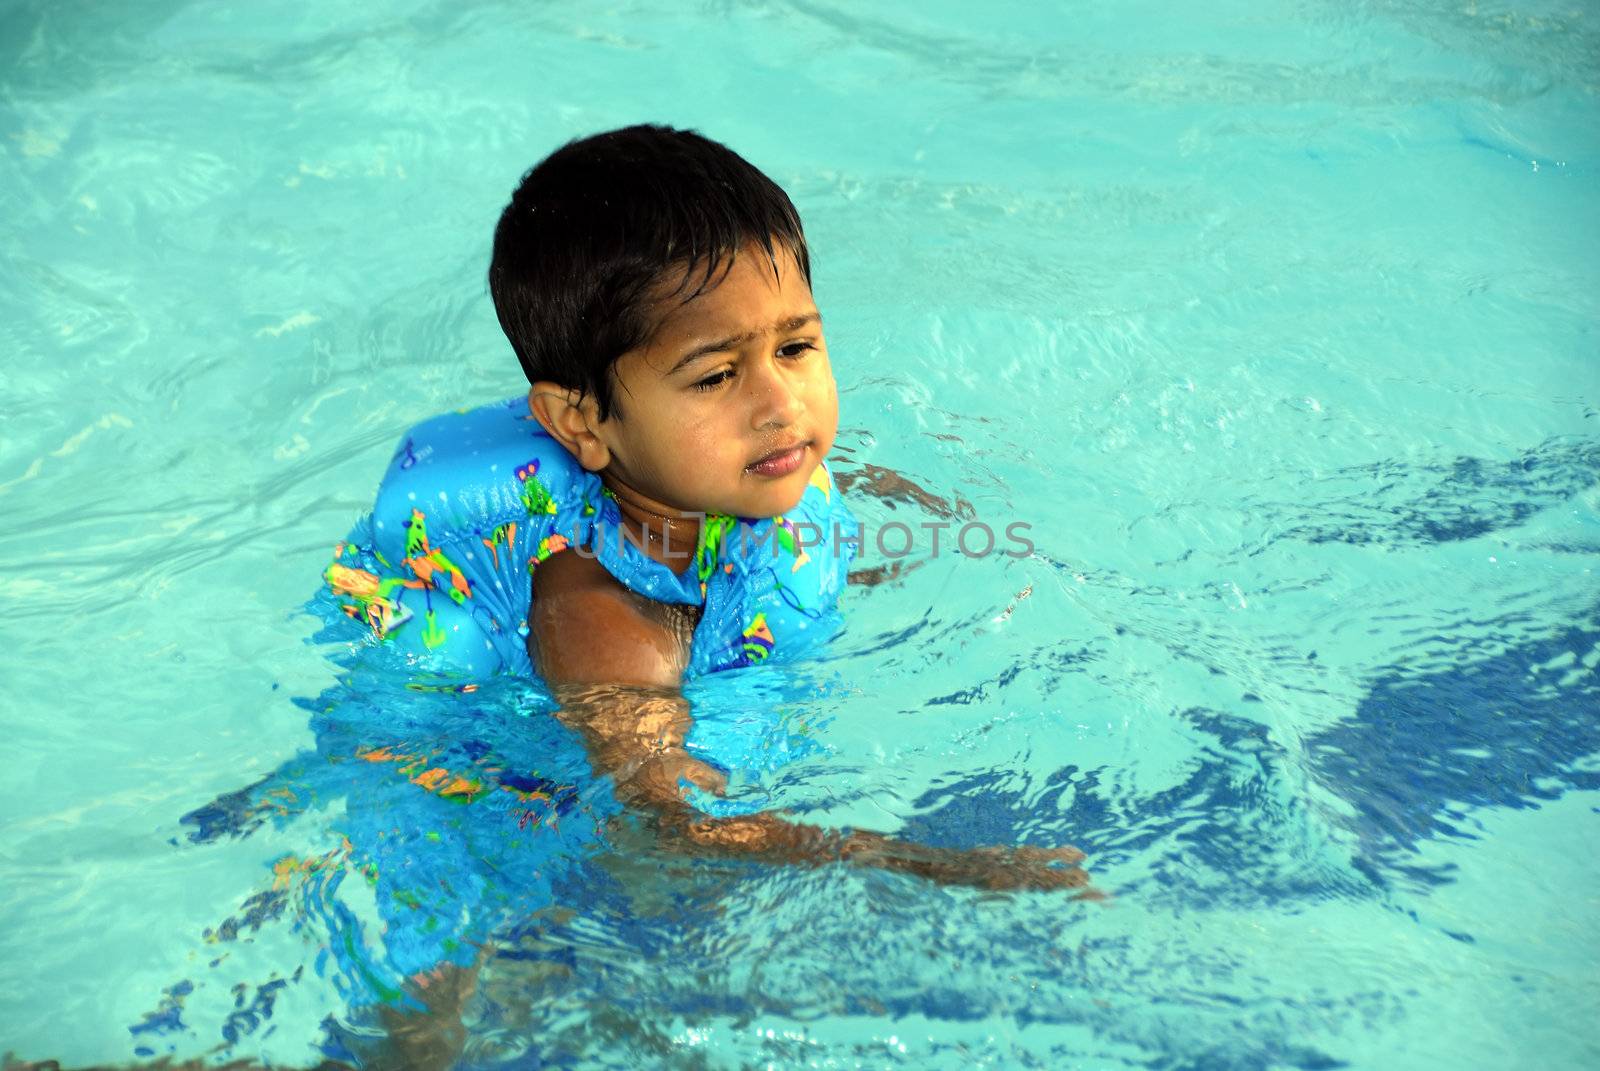 An young indian boy having fun smimming in the pool